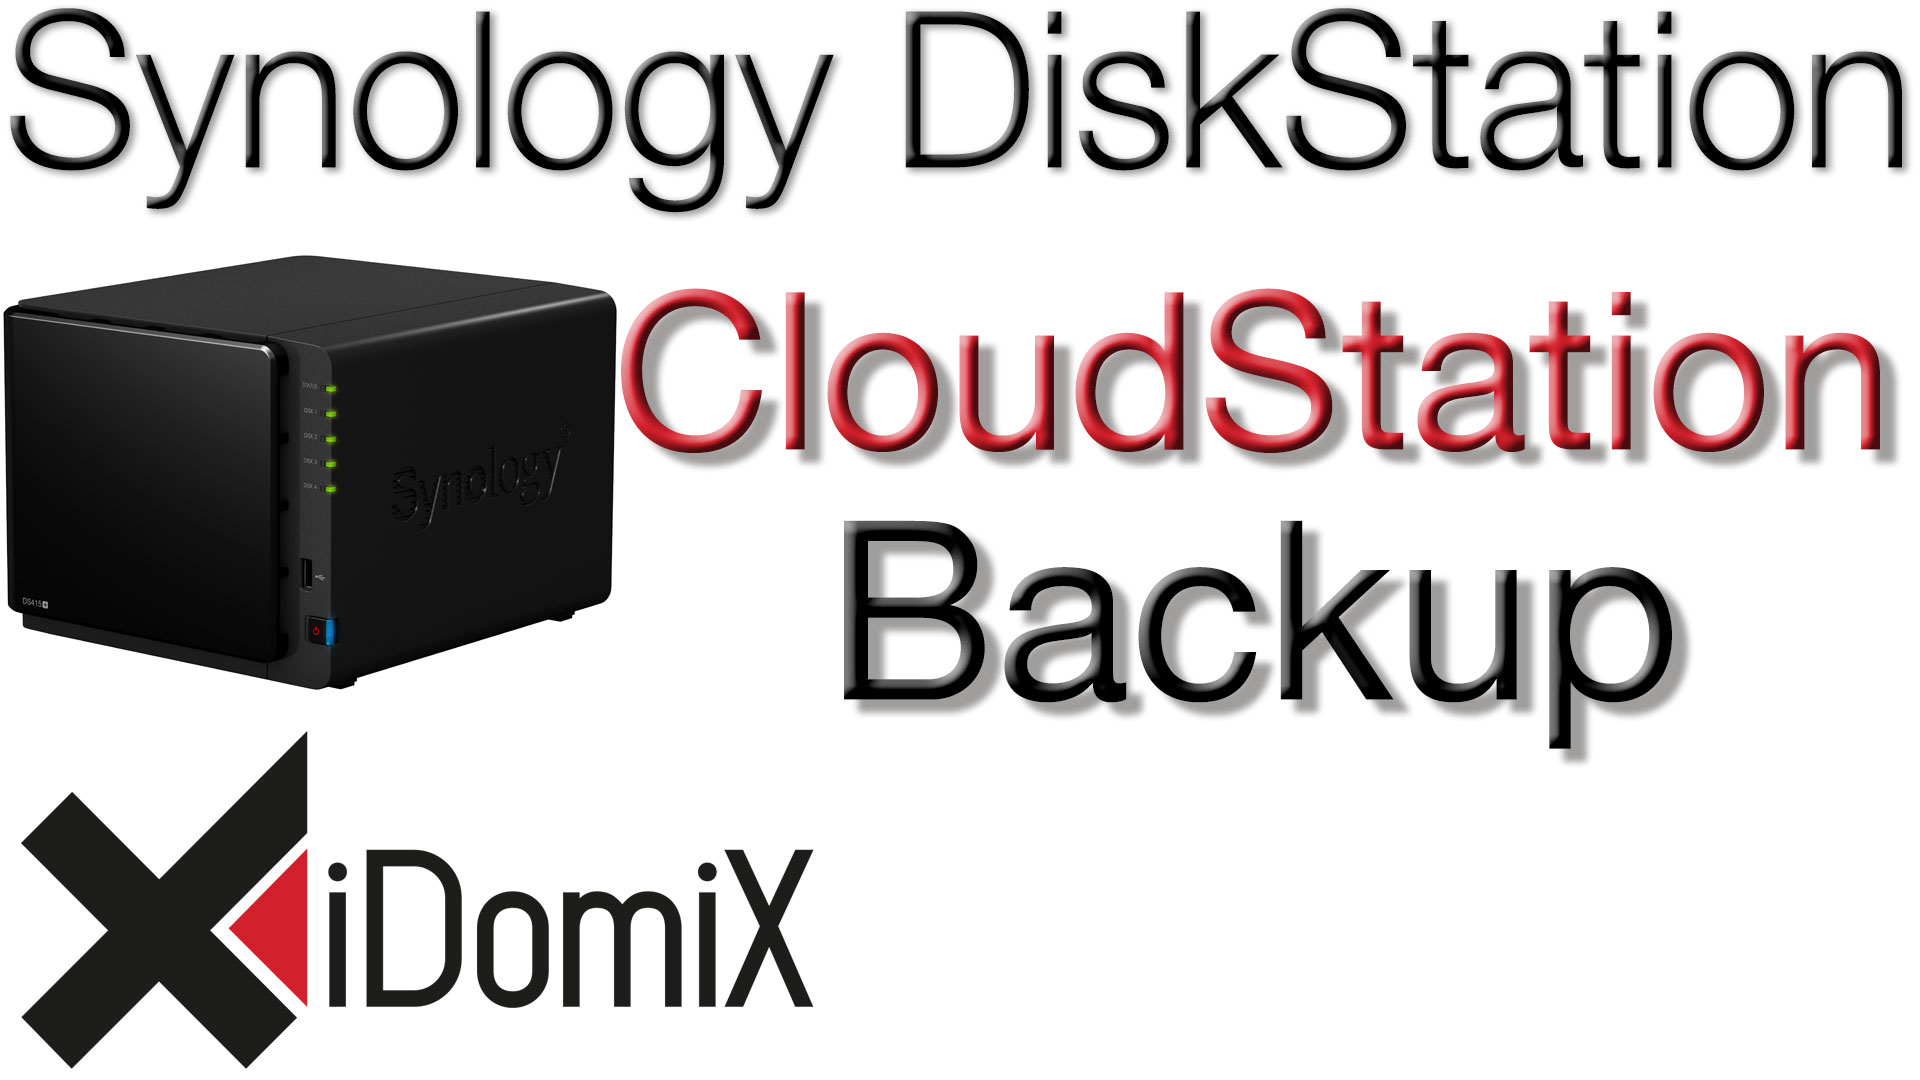 synology cloud station backup vs hyper backup